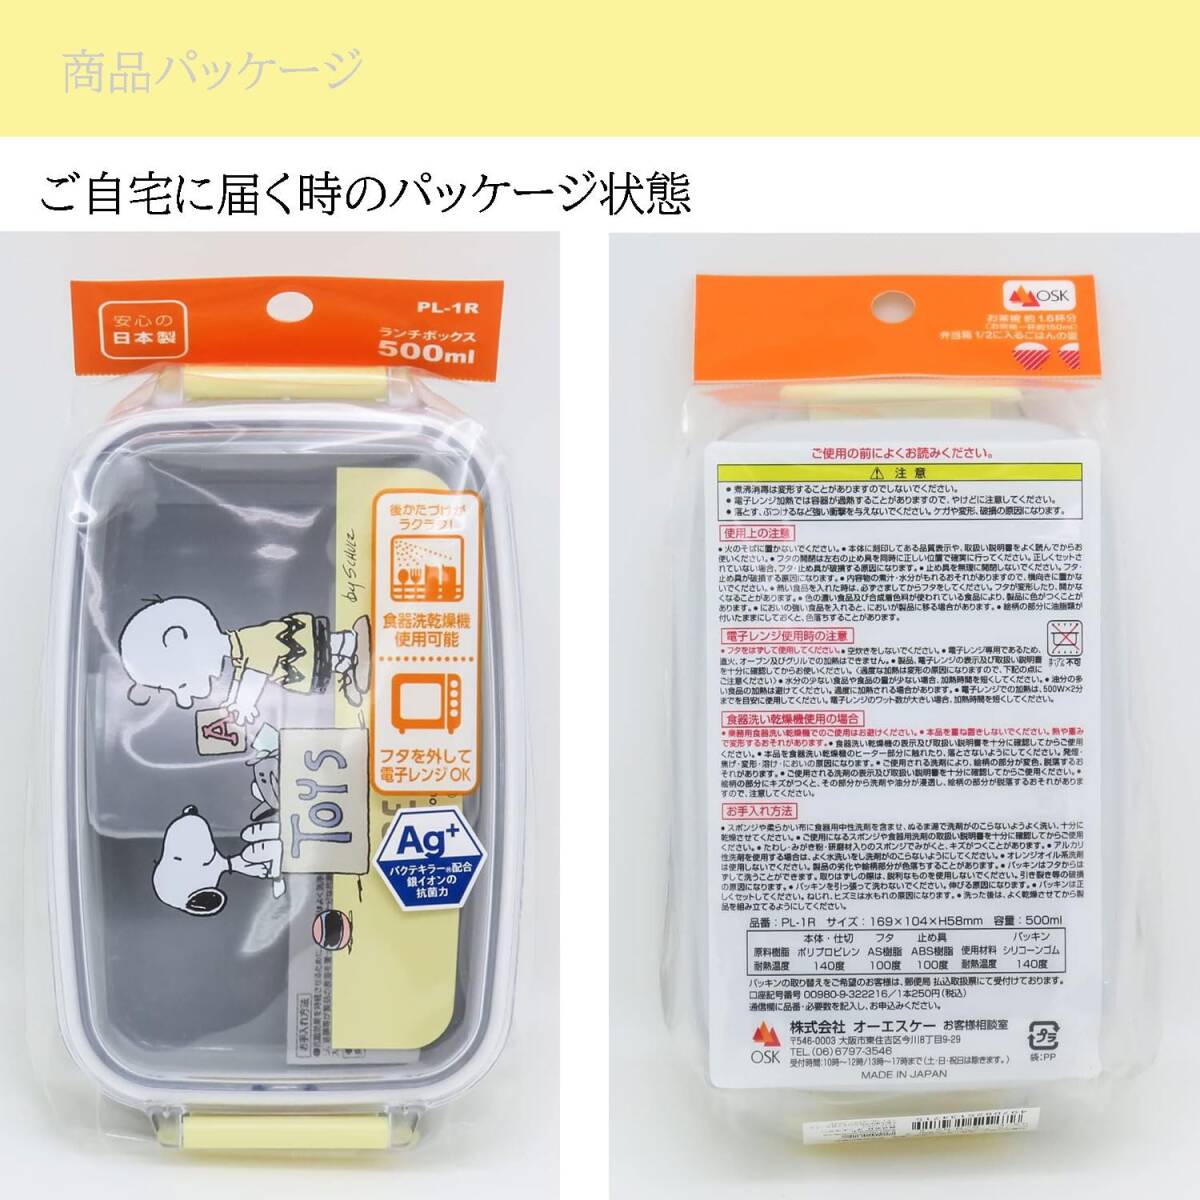 OSK(オーエスケー) 弁当箱 スヌーピー ランチボックス 仕切り付 イエロー グレー 500ml 日本製 食洗機 電子レンジ対応 抗菌 ロック_画像5